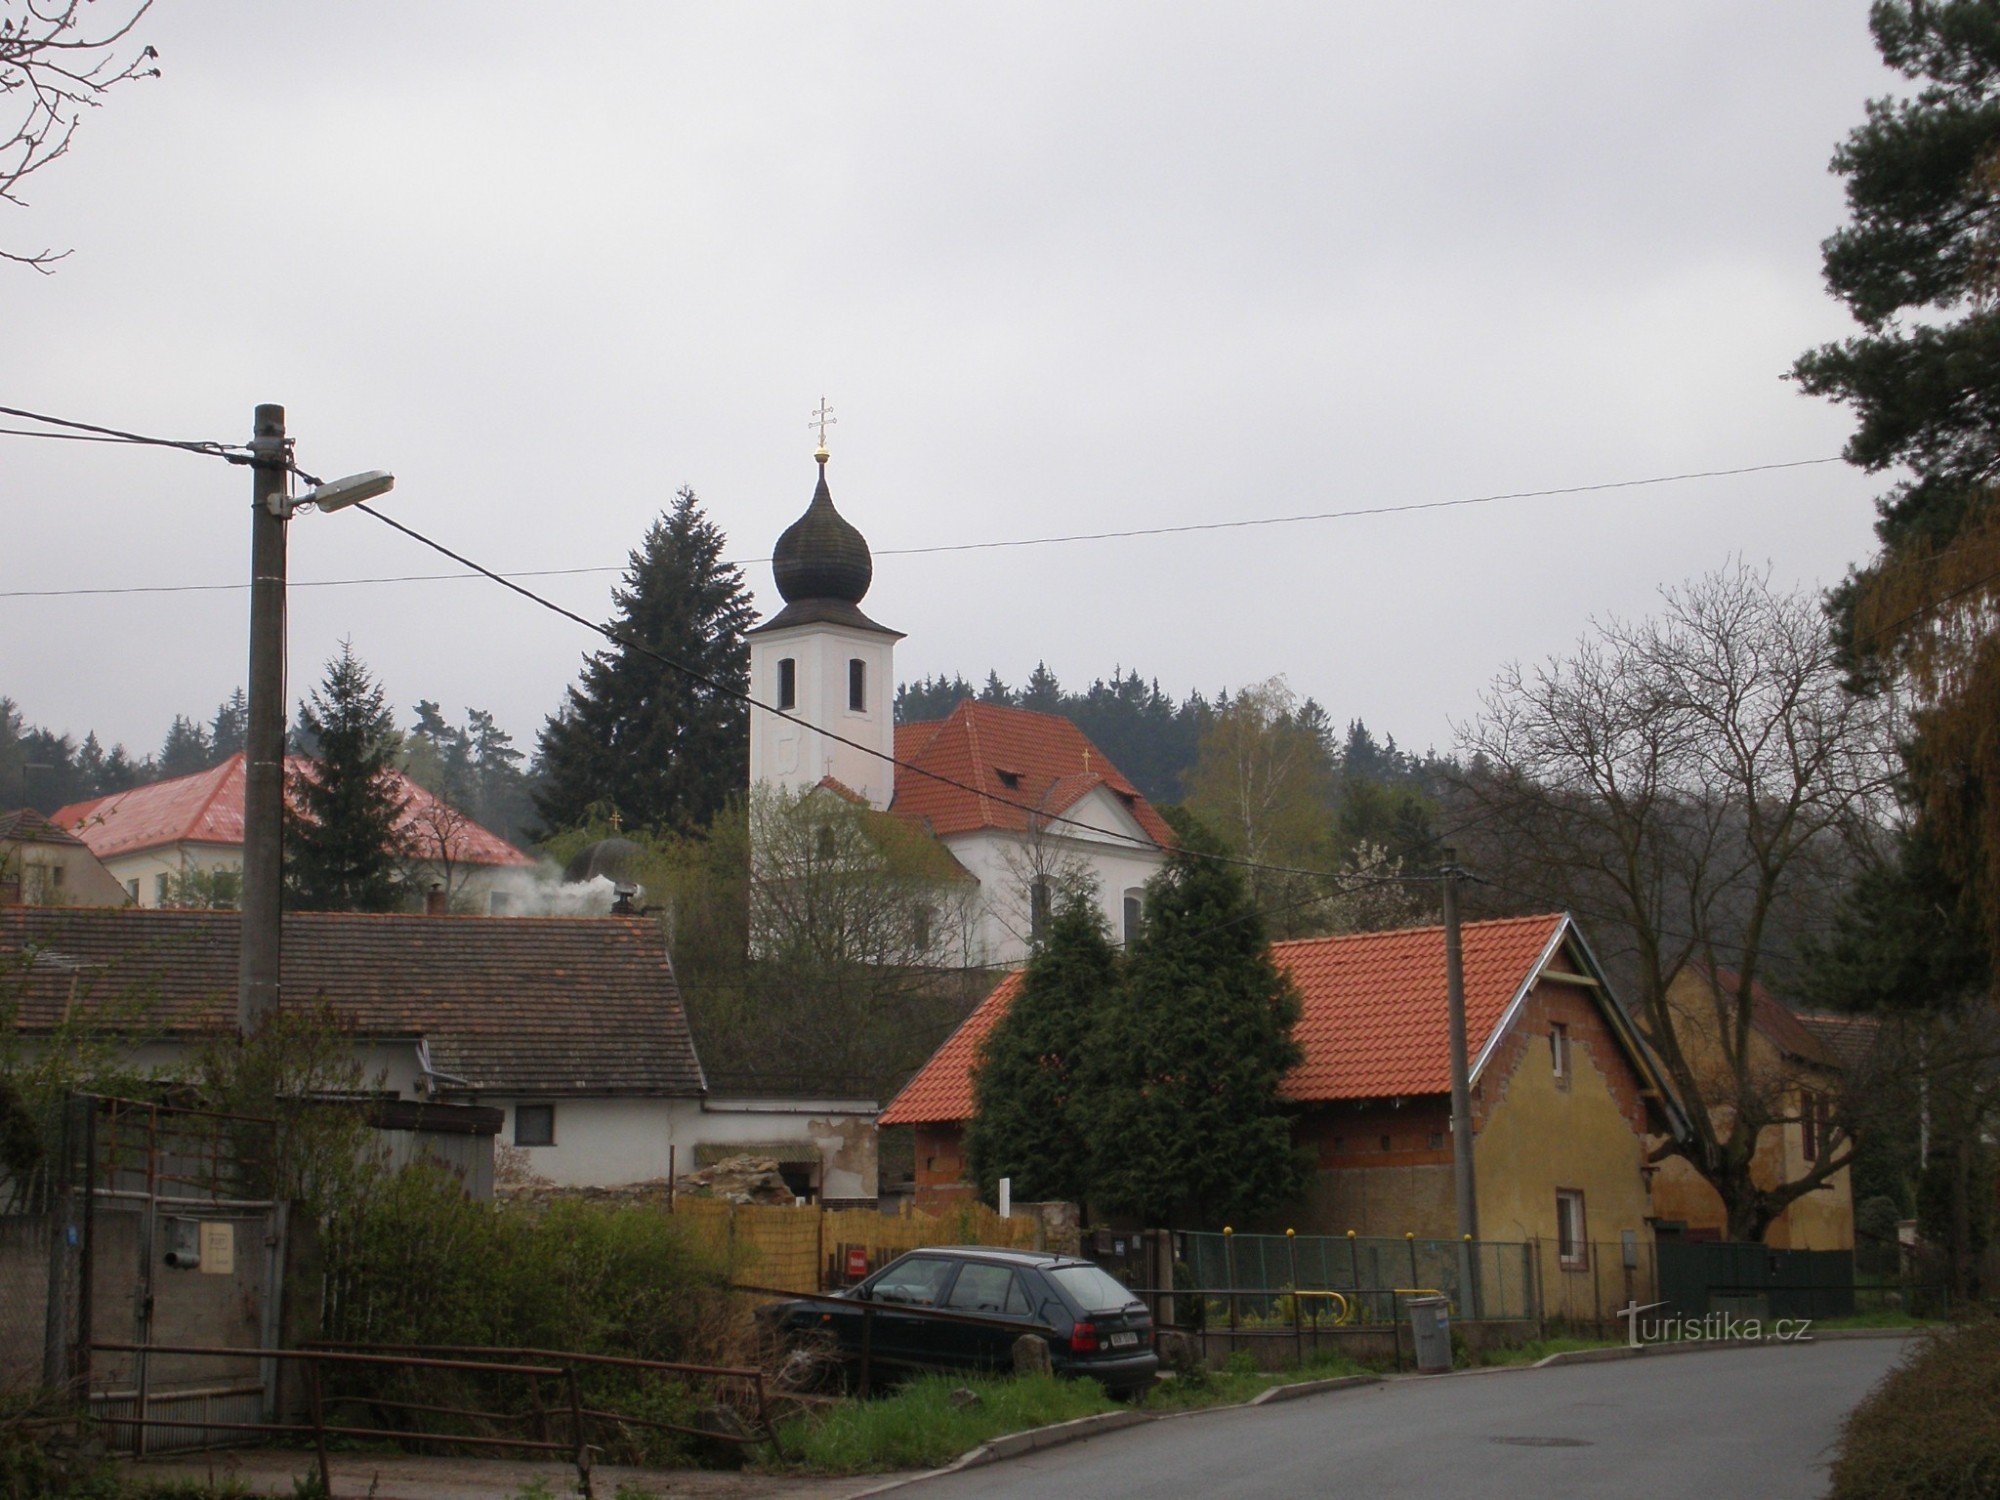 Vrané nad Vltavou com uma igreja